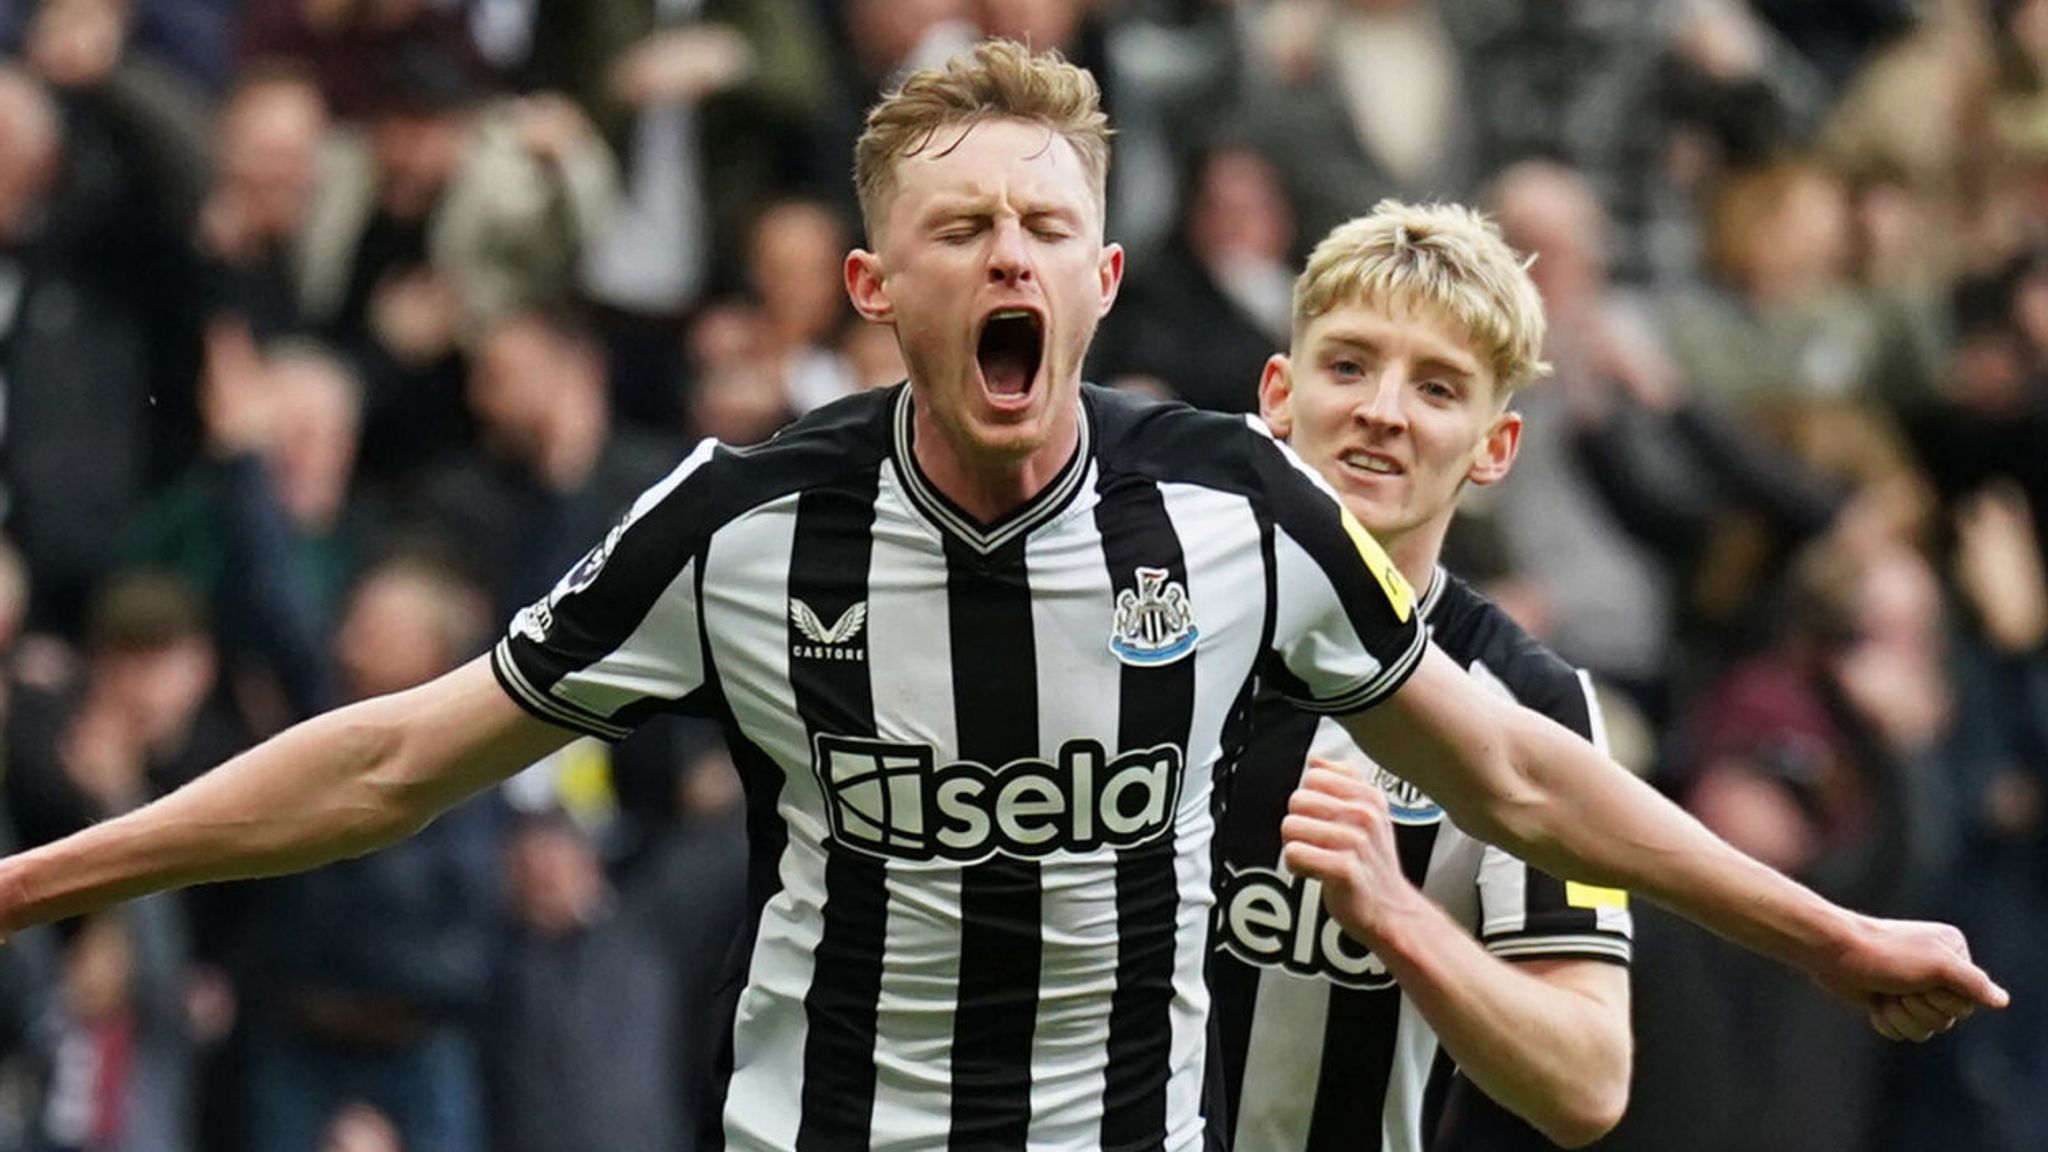 Newcastle 4 - 4 Luton - Match Report & Highlights